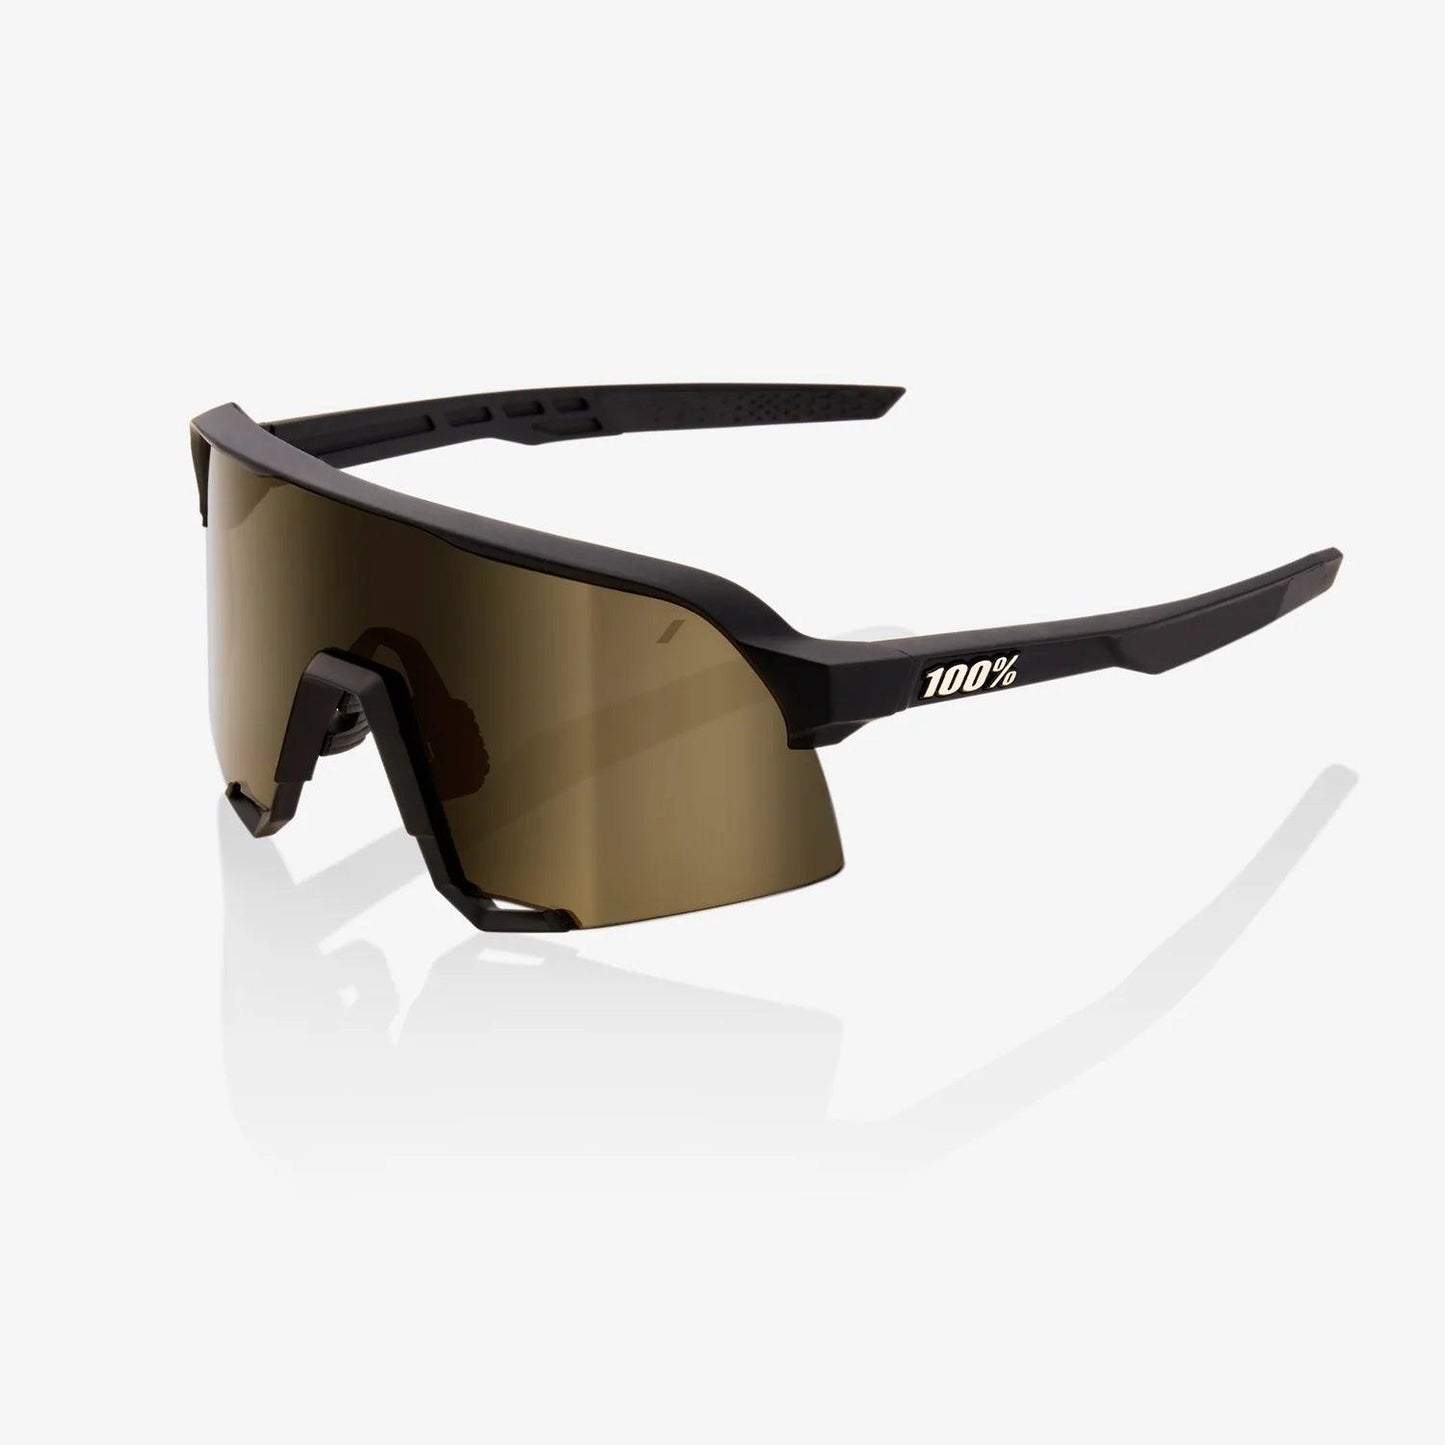 100 Percent Sunglasses - S3 - Soft Tact Black - Soft Gold Mirror Lens - Smash It Sports